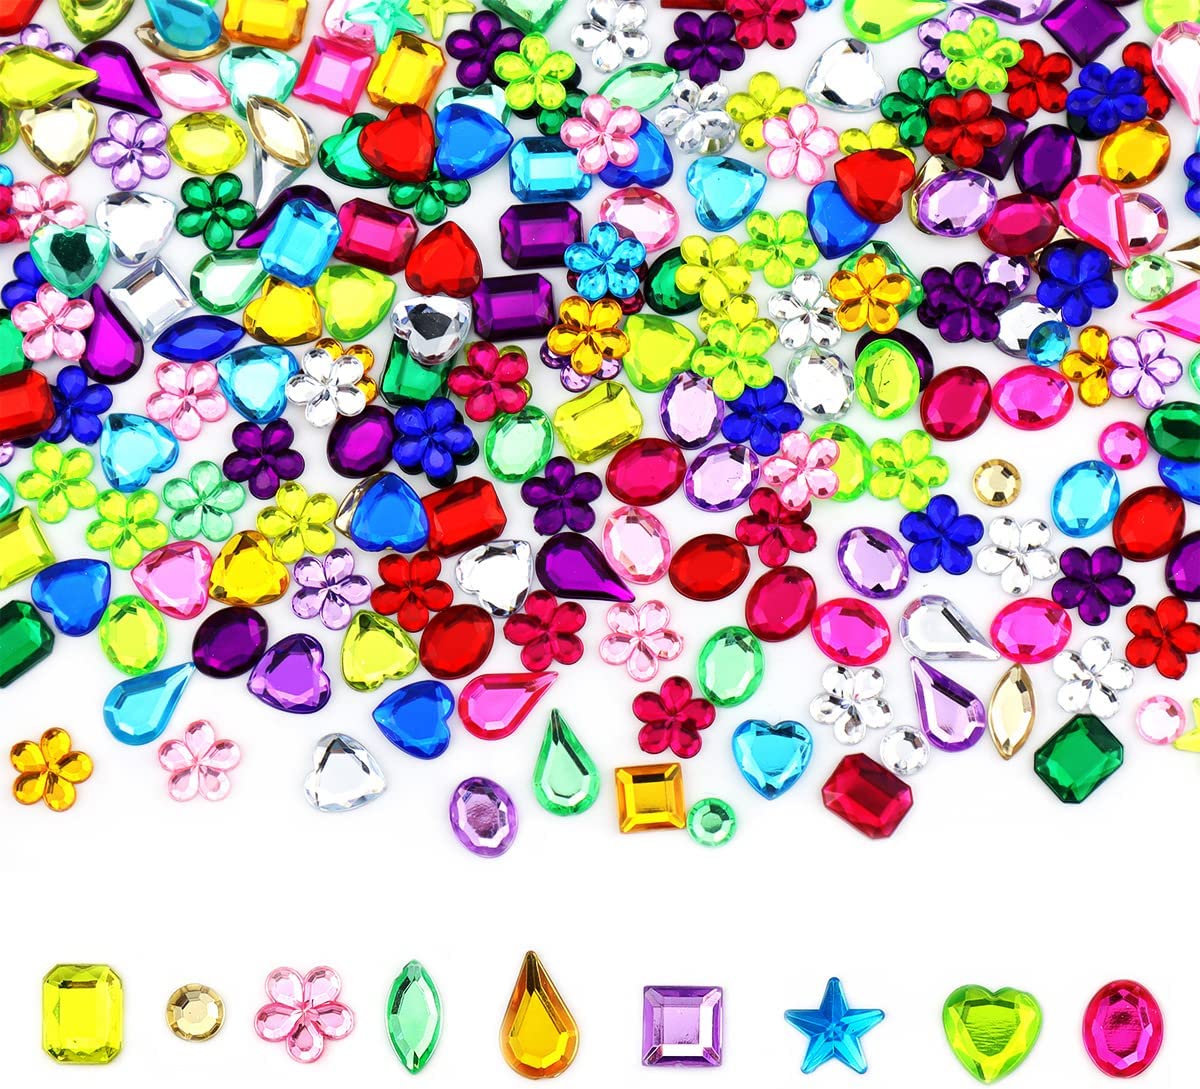 50Pcs 30mm Flat Back Round Acrylic Rhinestone Self-Adhesive Plastic Circle  Gems Stick On Jewels(Red) for Costume Making Cosplay Jewels Invitation